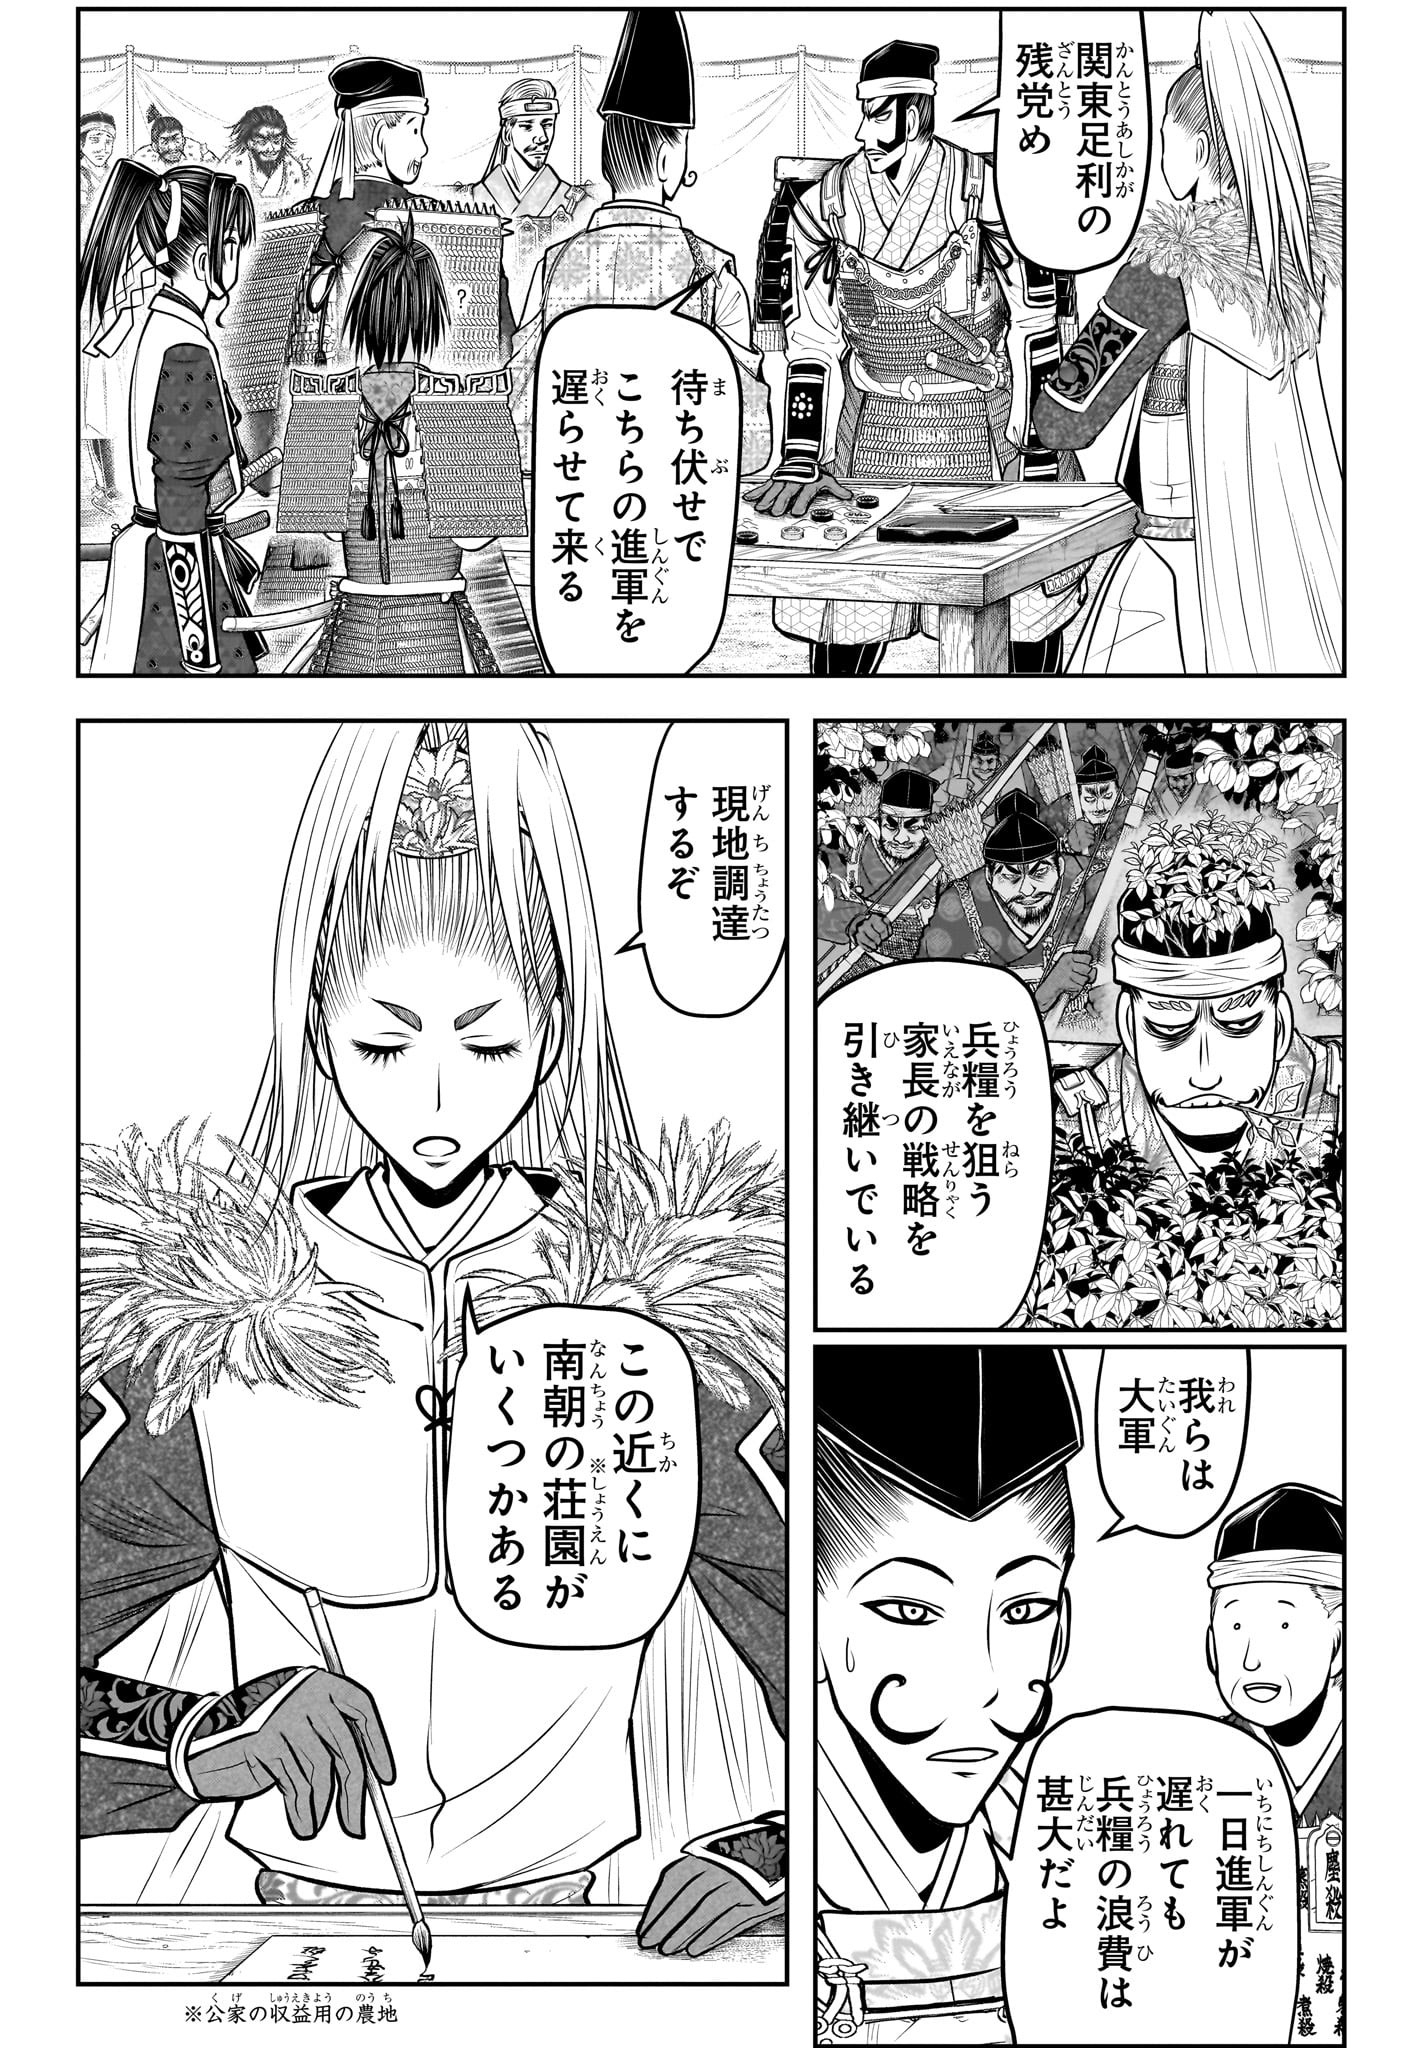 Nige Jouzu no Wakagimi - Chapter 135 - Page 2